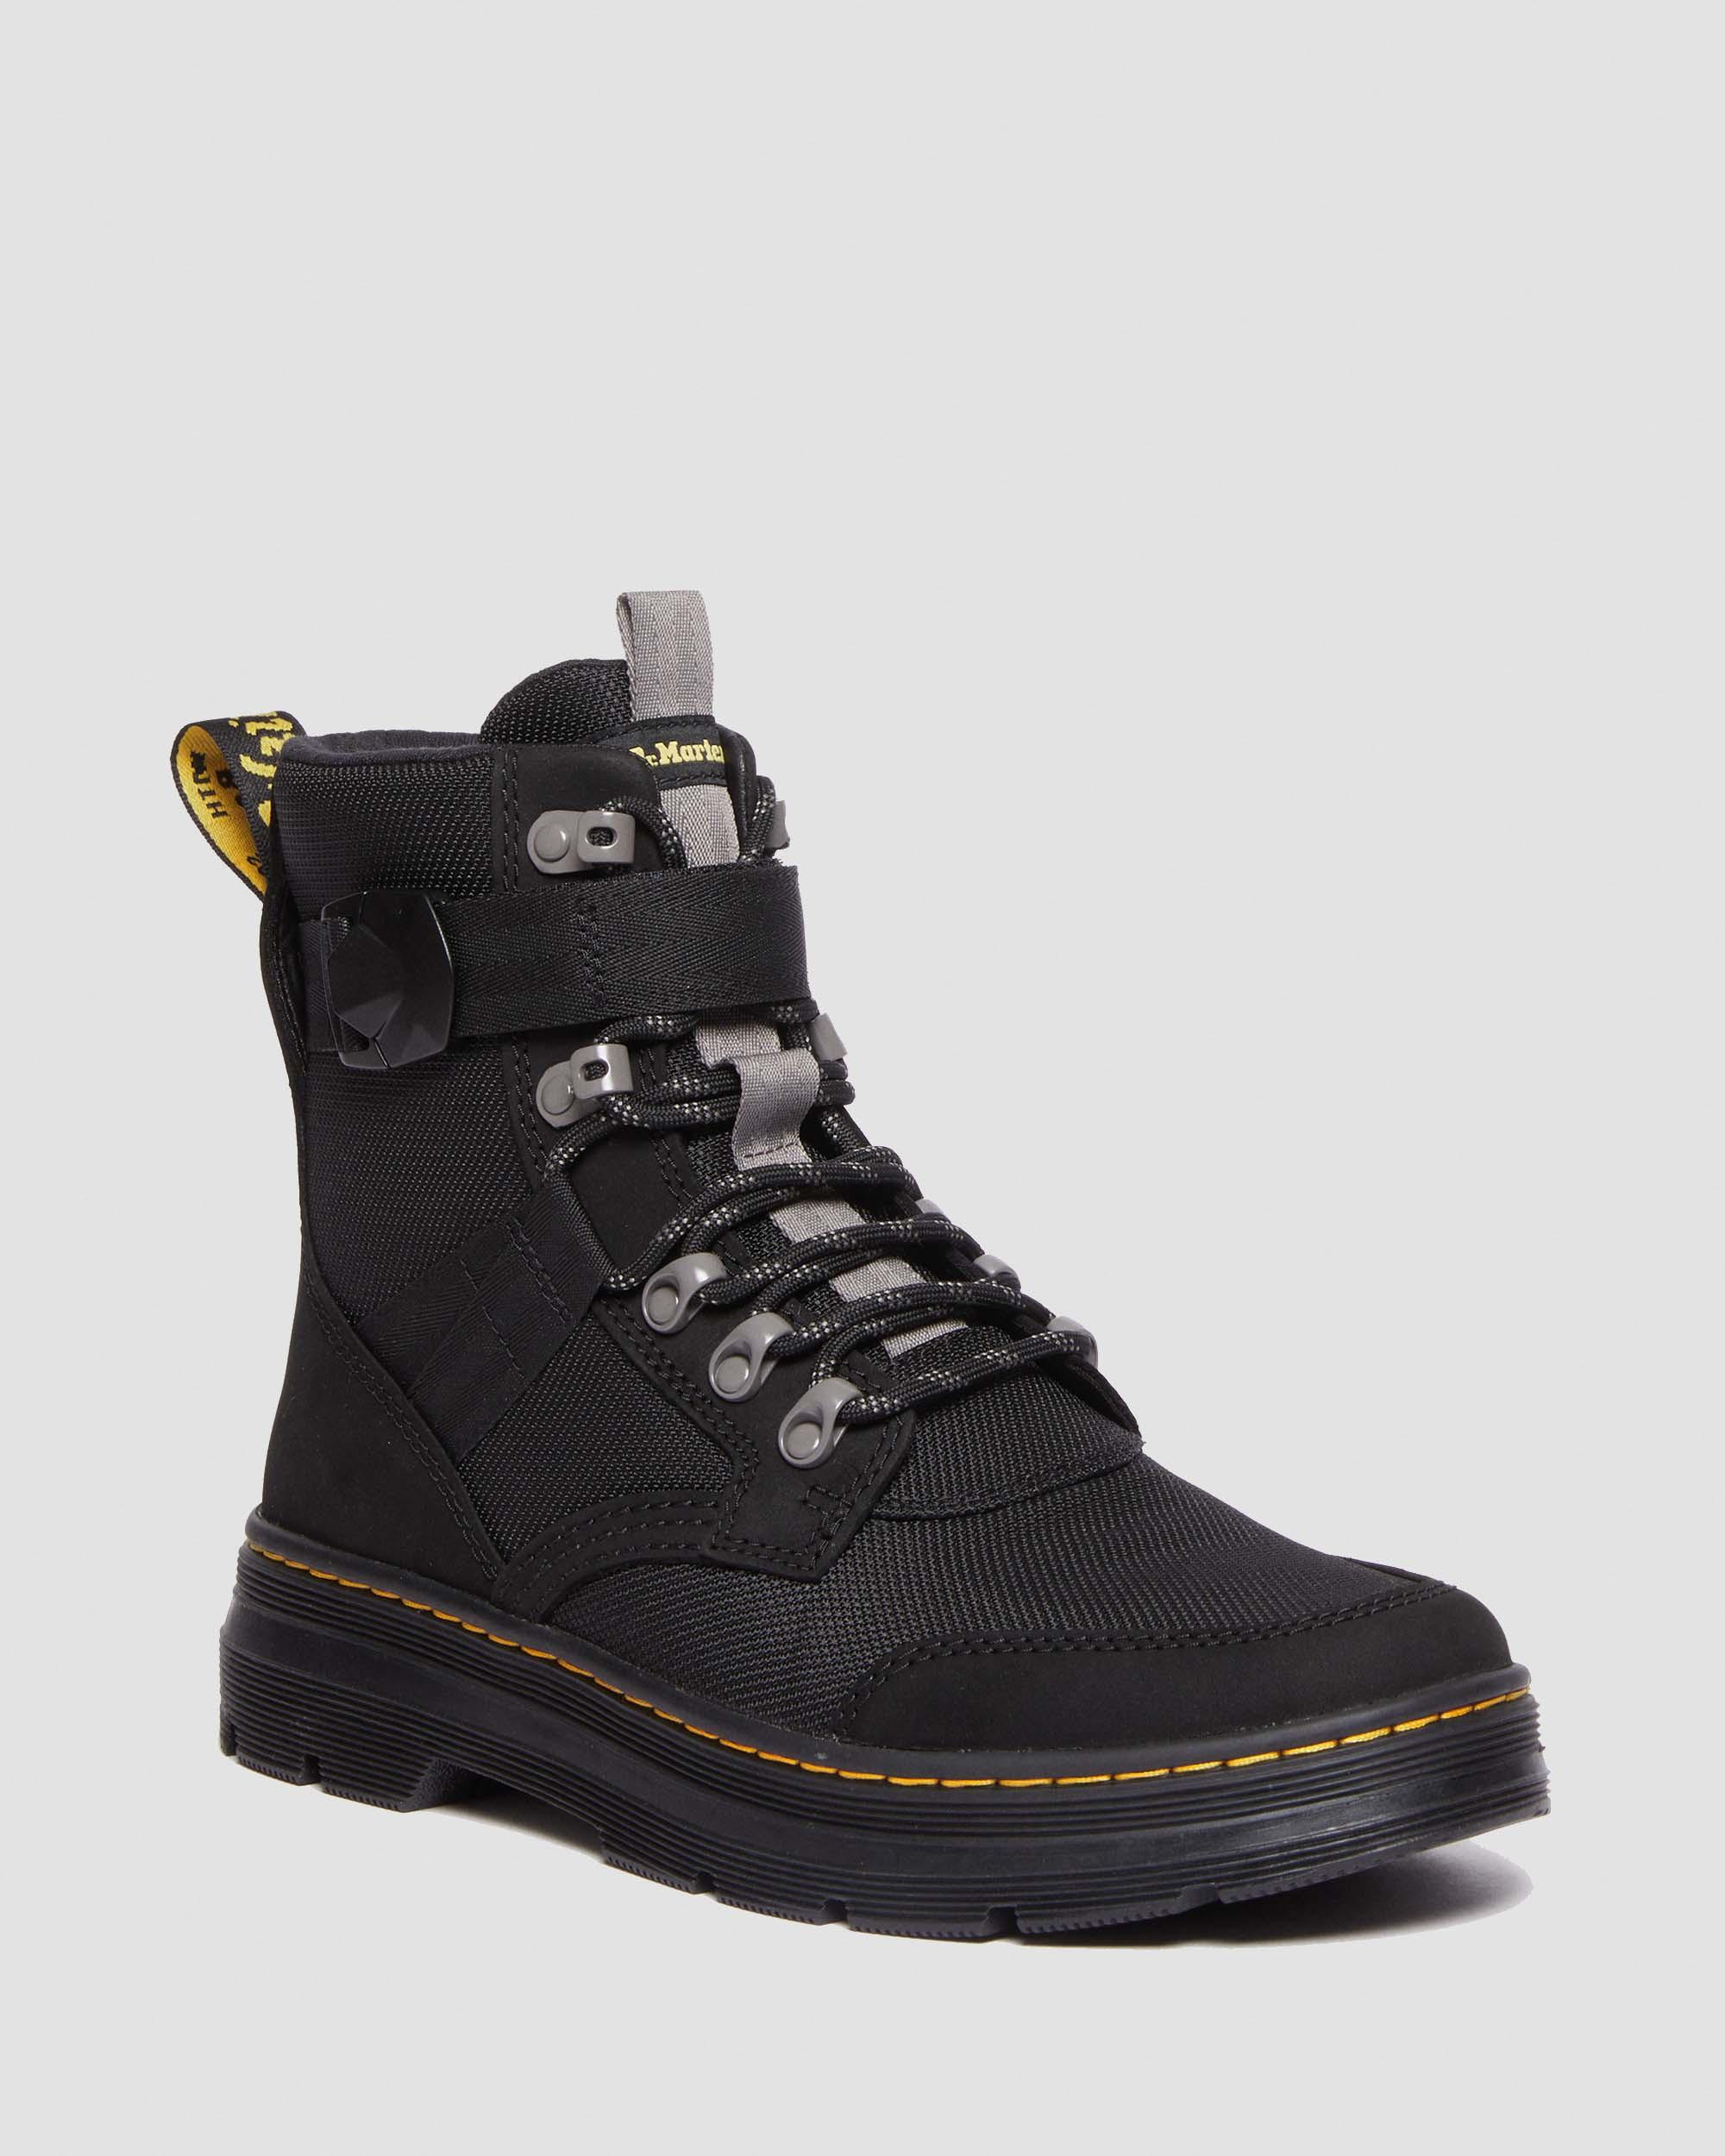 Combs Tech II Fleece-Lined Casual Boots in BLACK